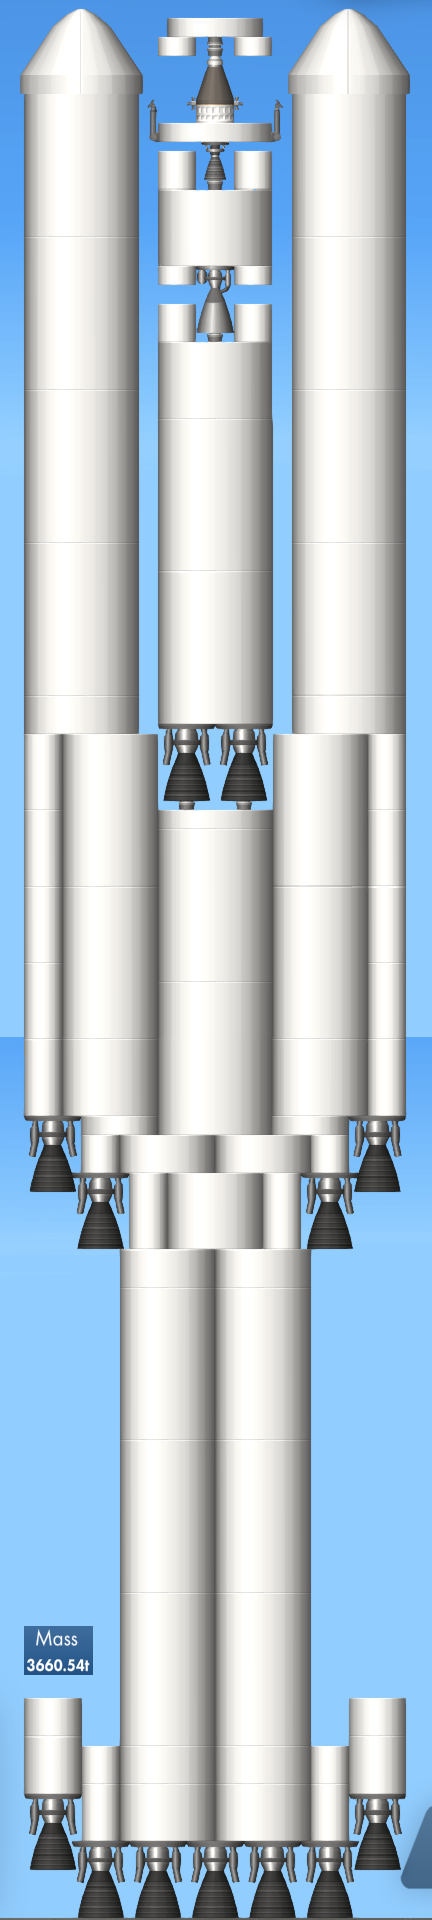 My best rocket !.png